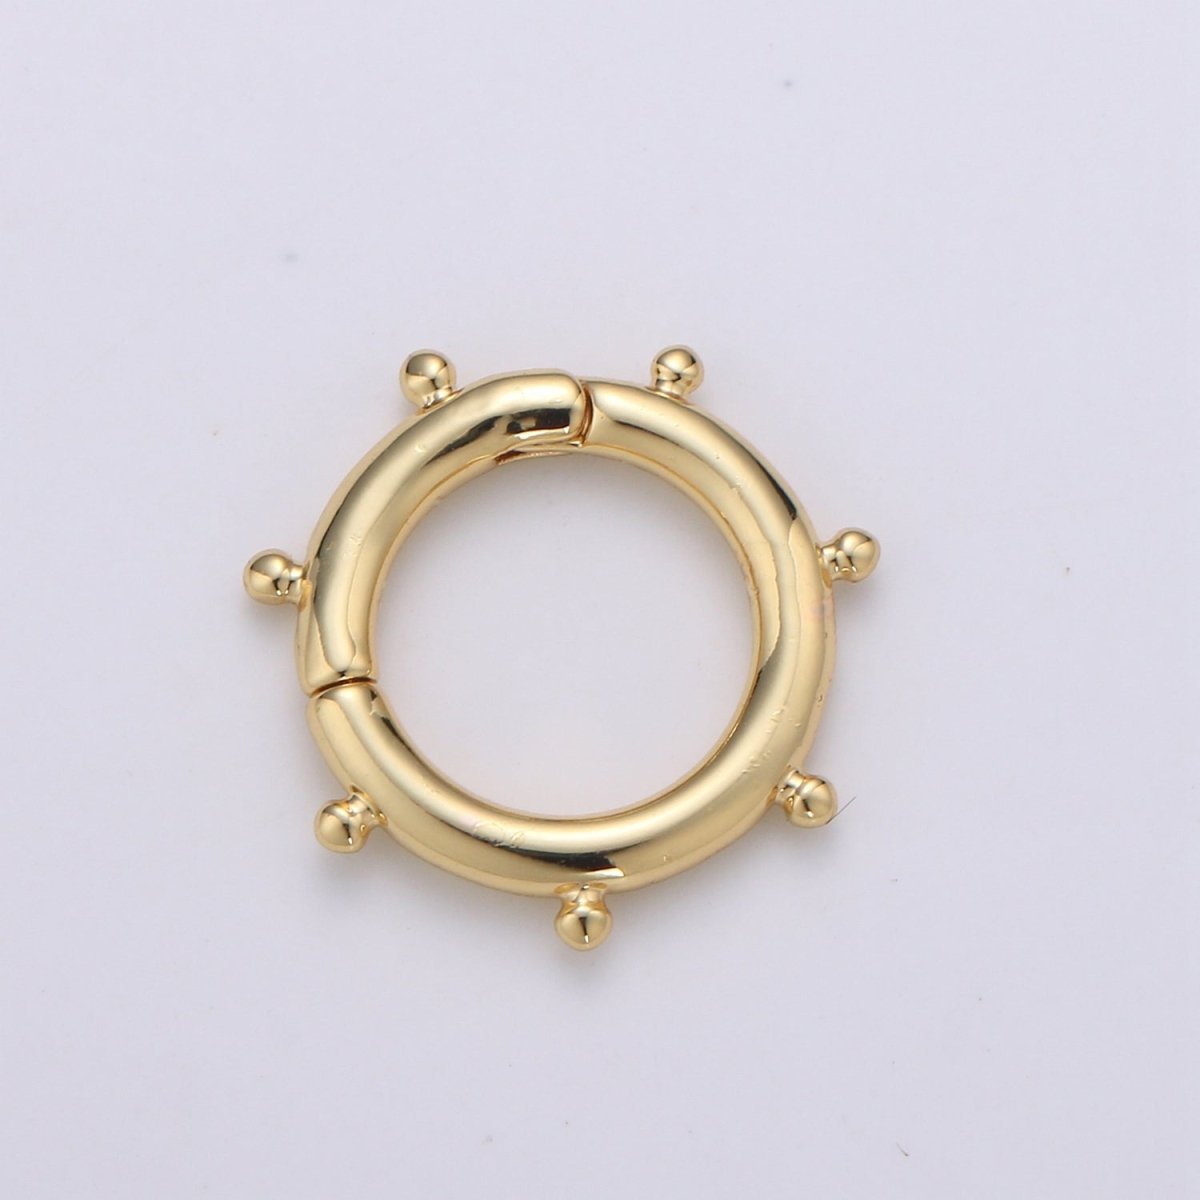 Nautical Gold Spirng Gate Ring, Gold Filled Pull Gate Ring, Ferris Wheel Gold Filled Carabiner Clasp For Connector Wristlet Holder L-092 - DLUXCA